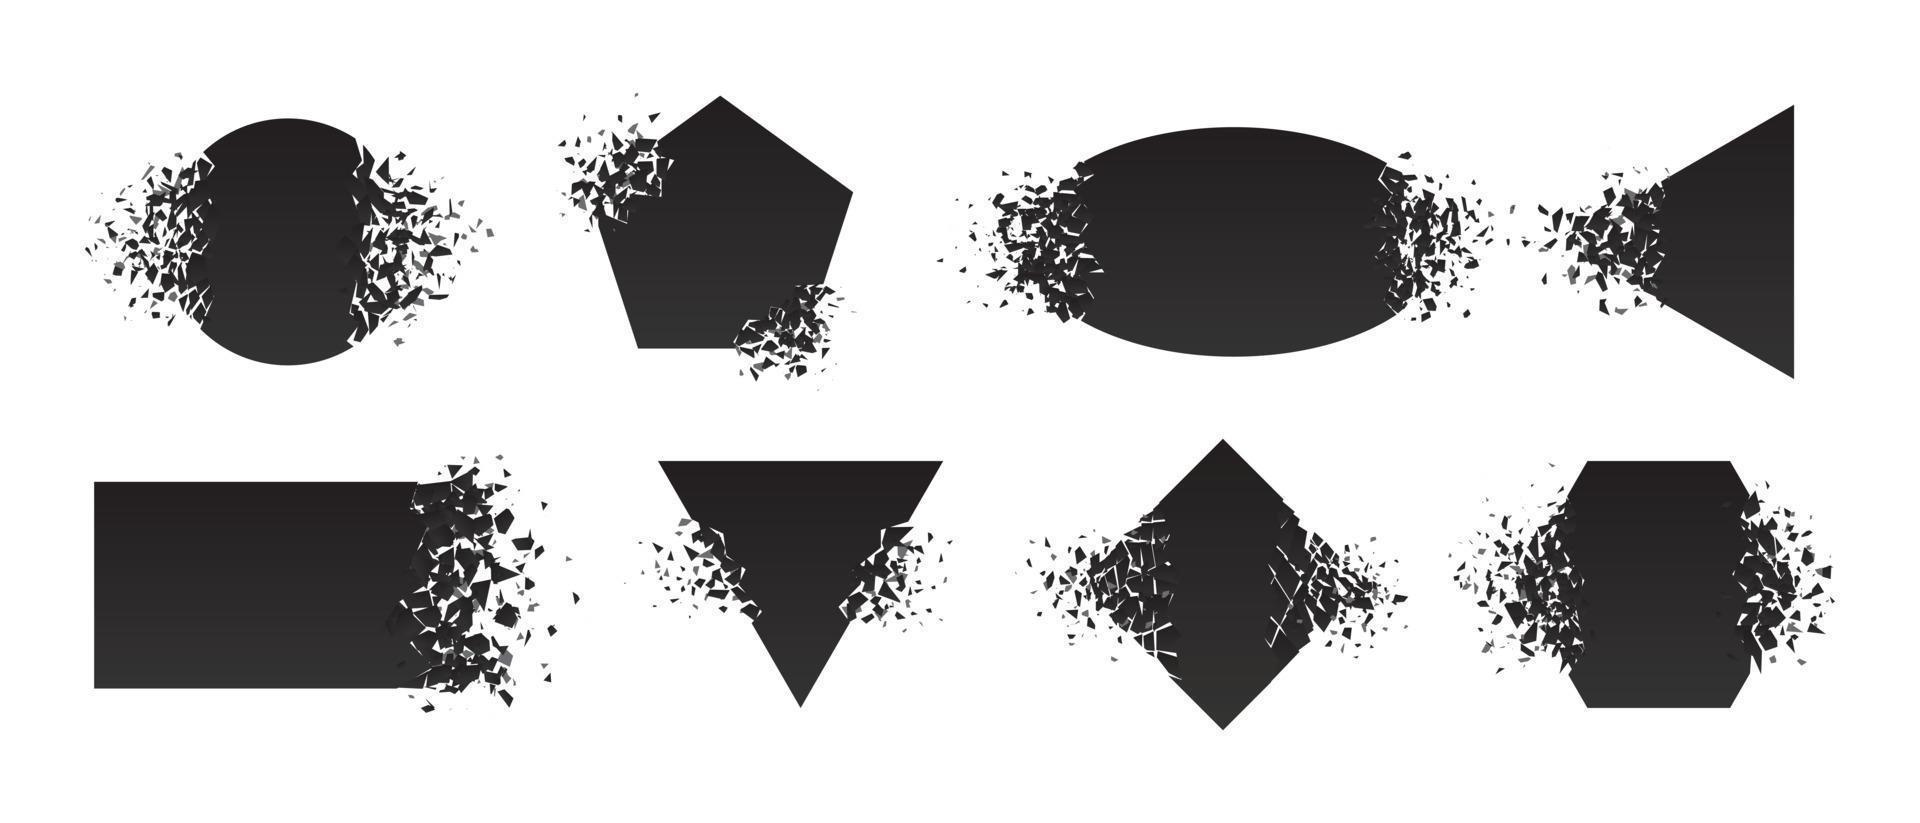 Shape shattered and explodes flat style design vector illustration set